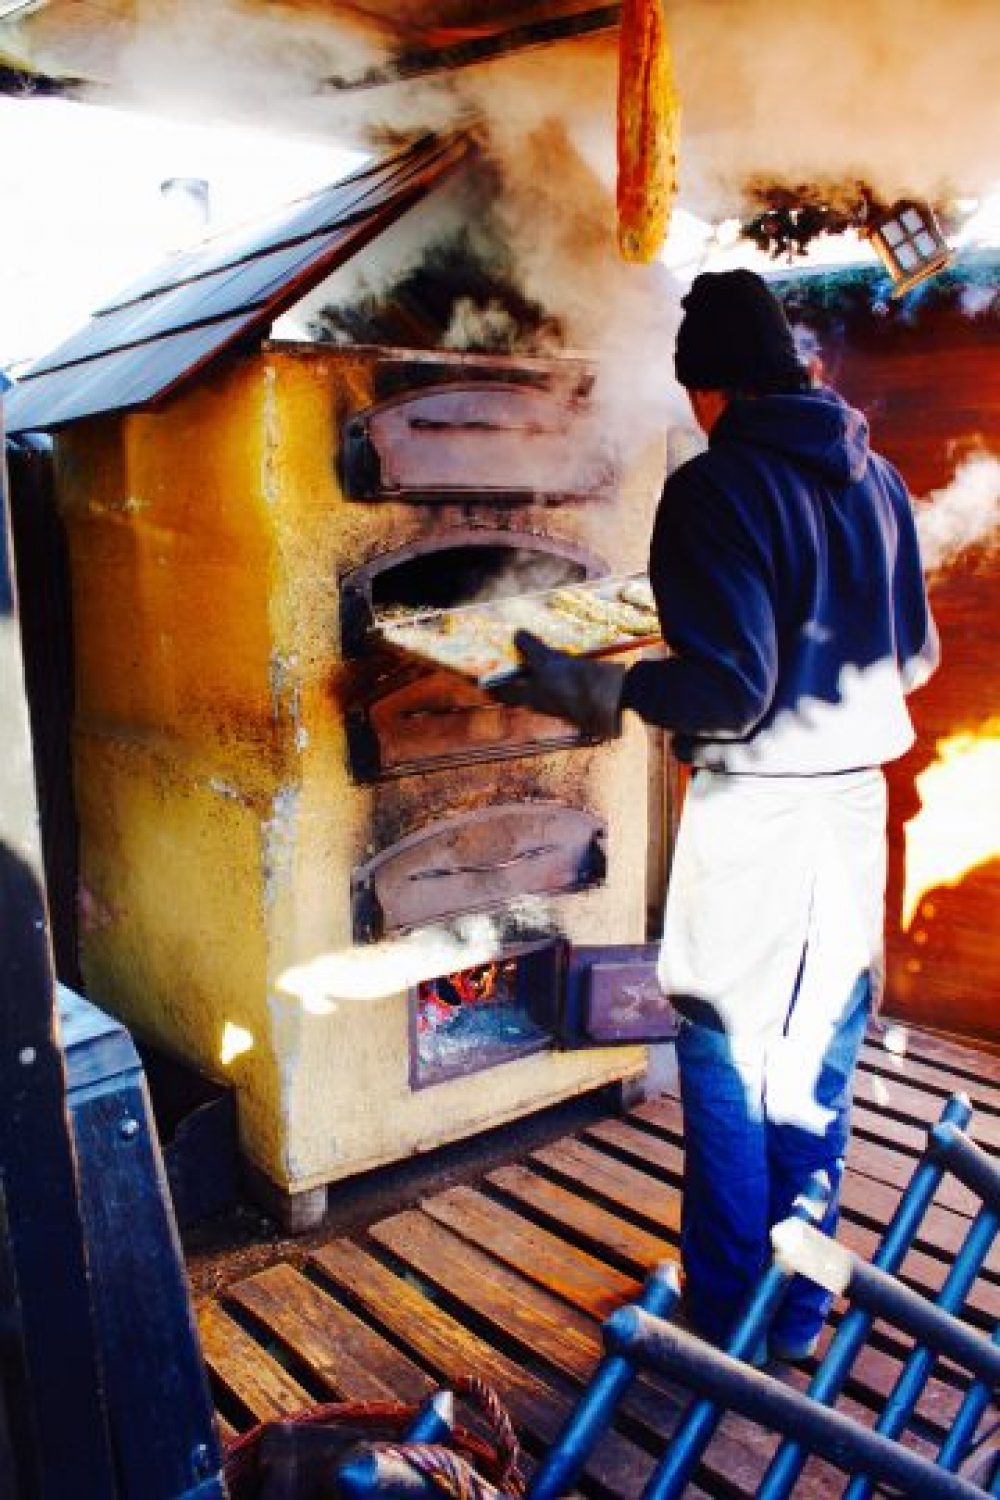 Flammkuchen wooden ovens